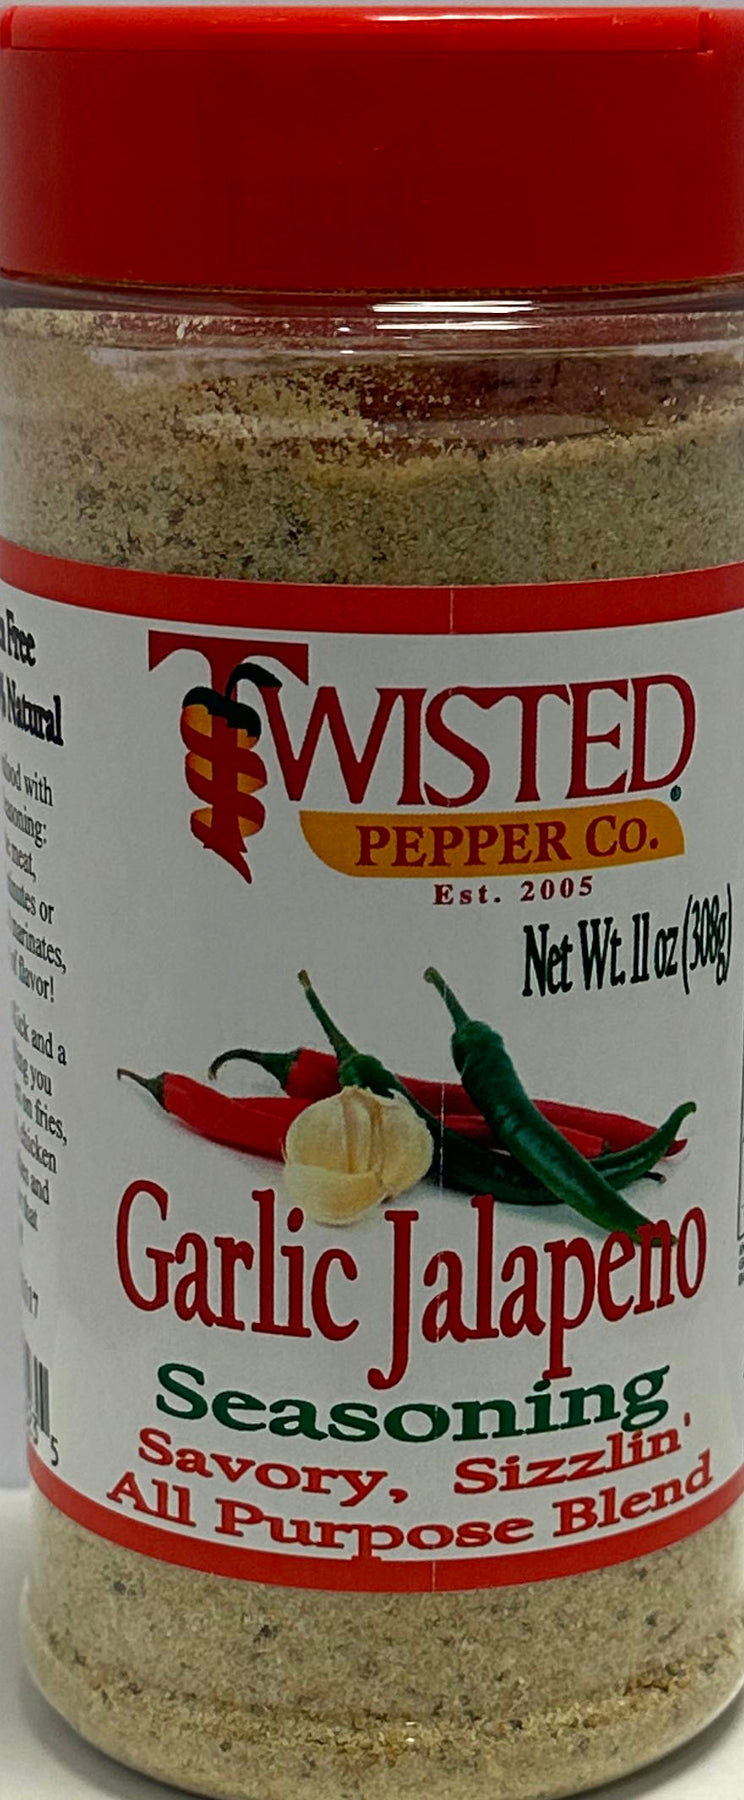 CO entrepreneurs release Folsom-inspired garlic jalapeño seasoning